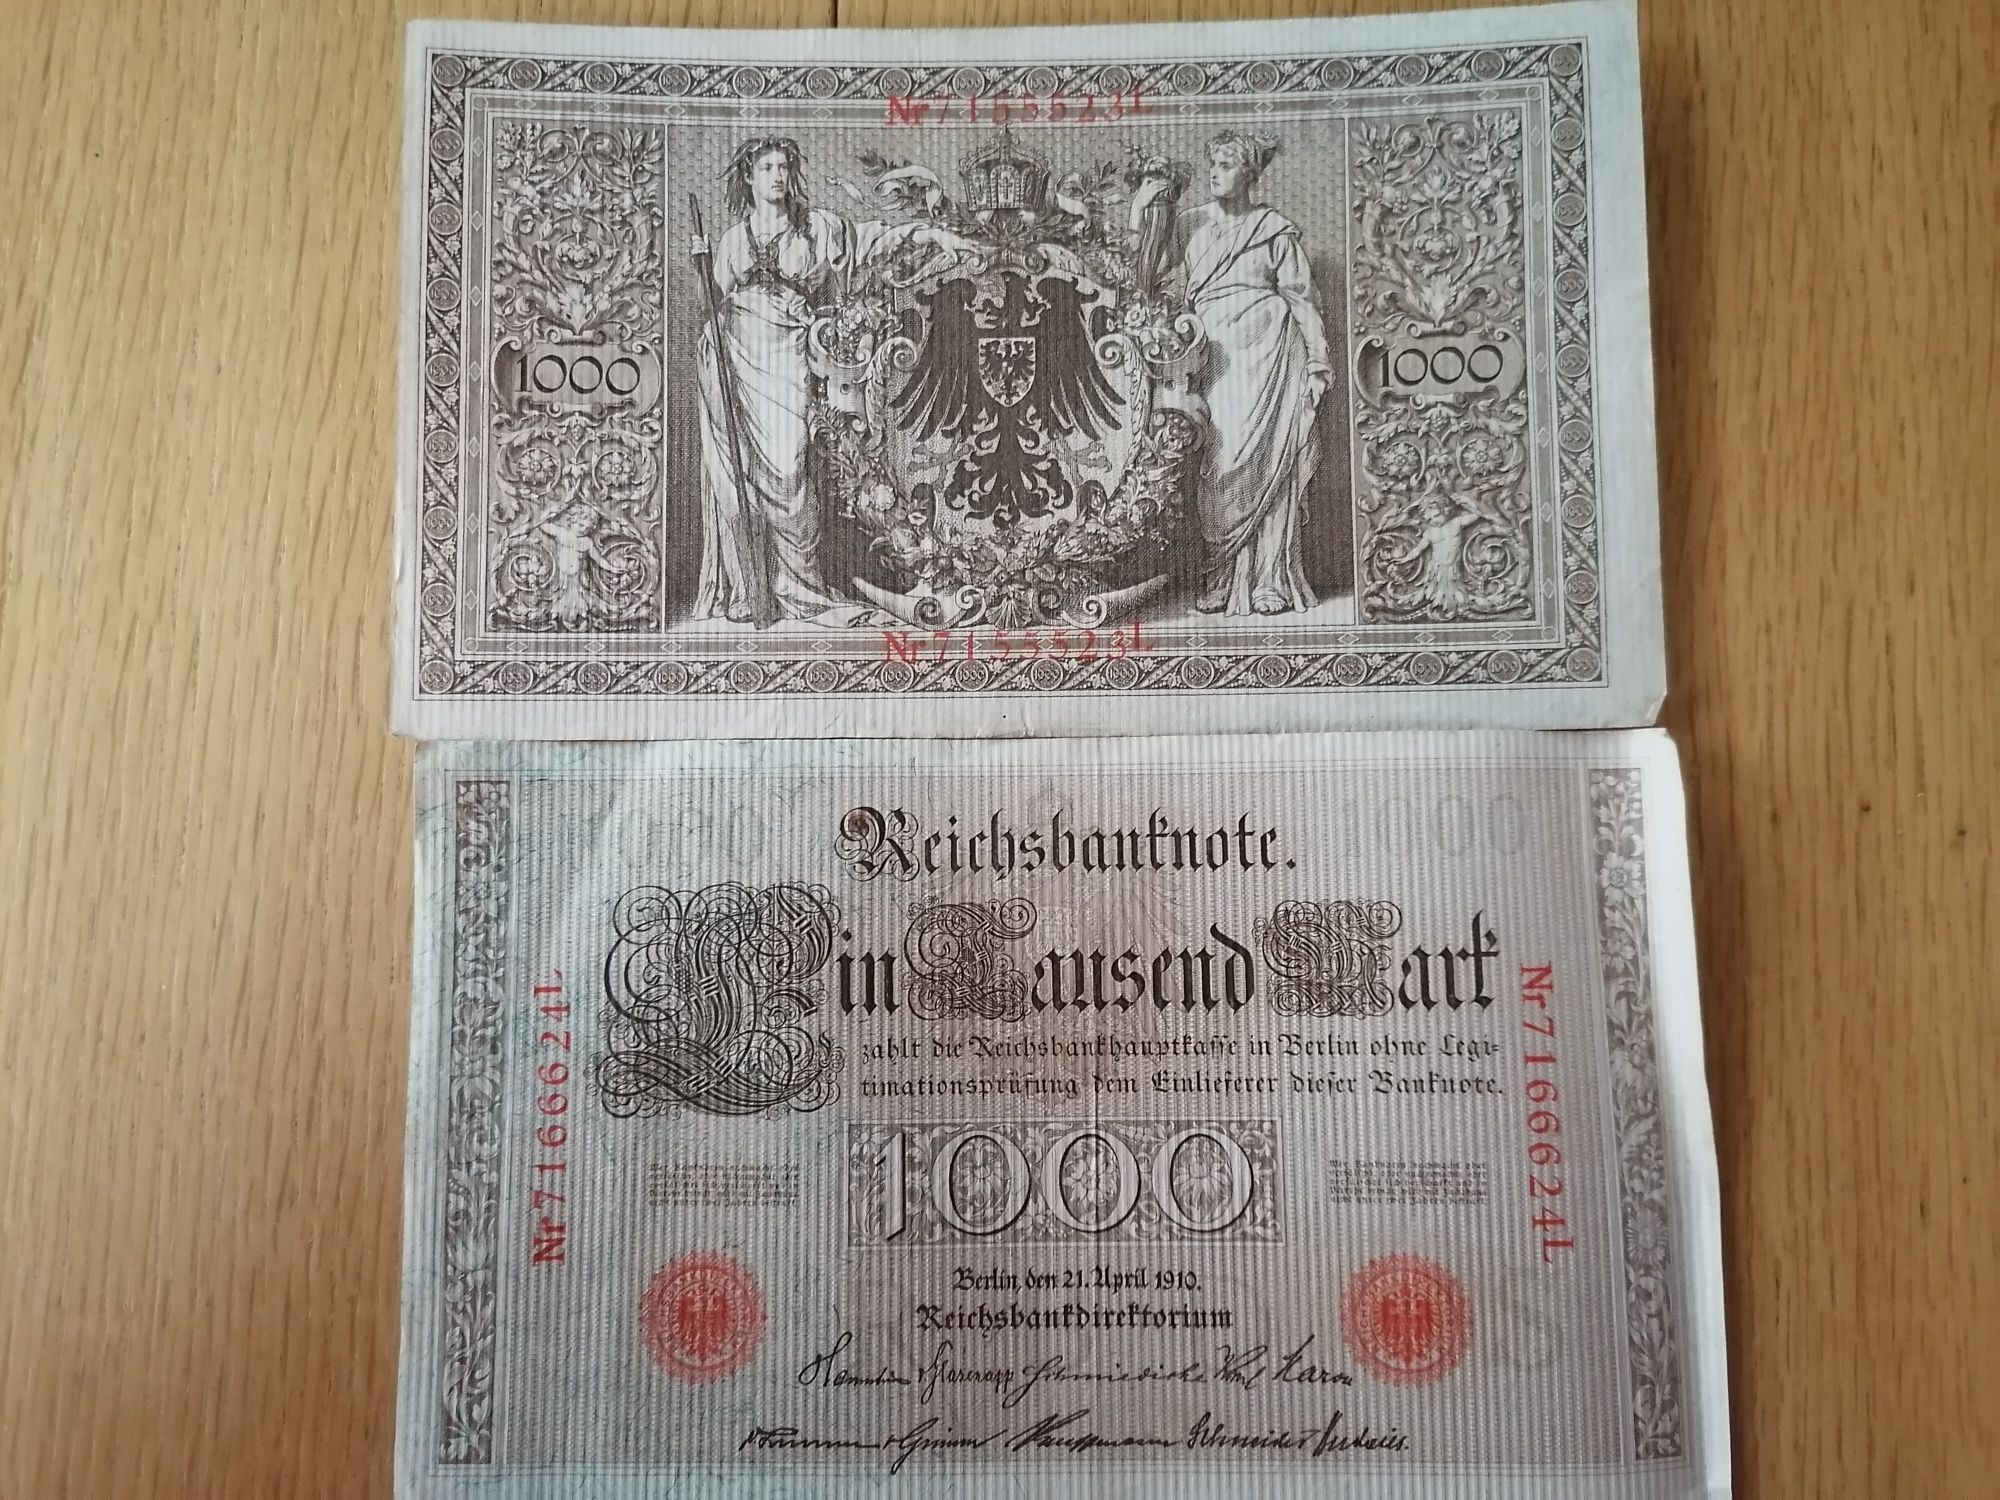 Banknot 1000 marek Niemieckich z 1910r.